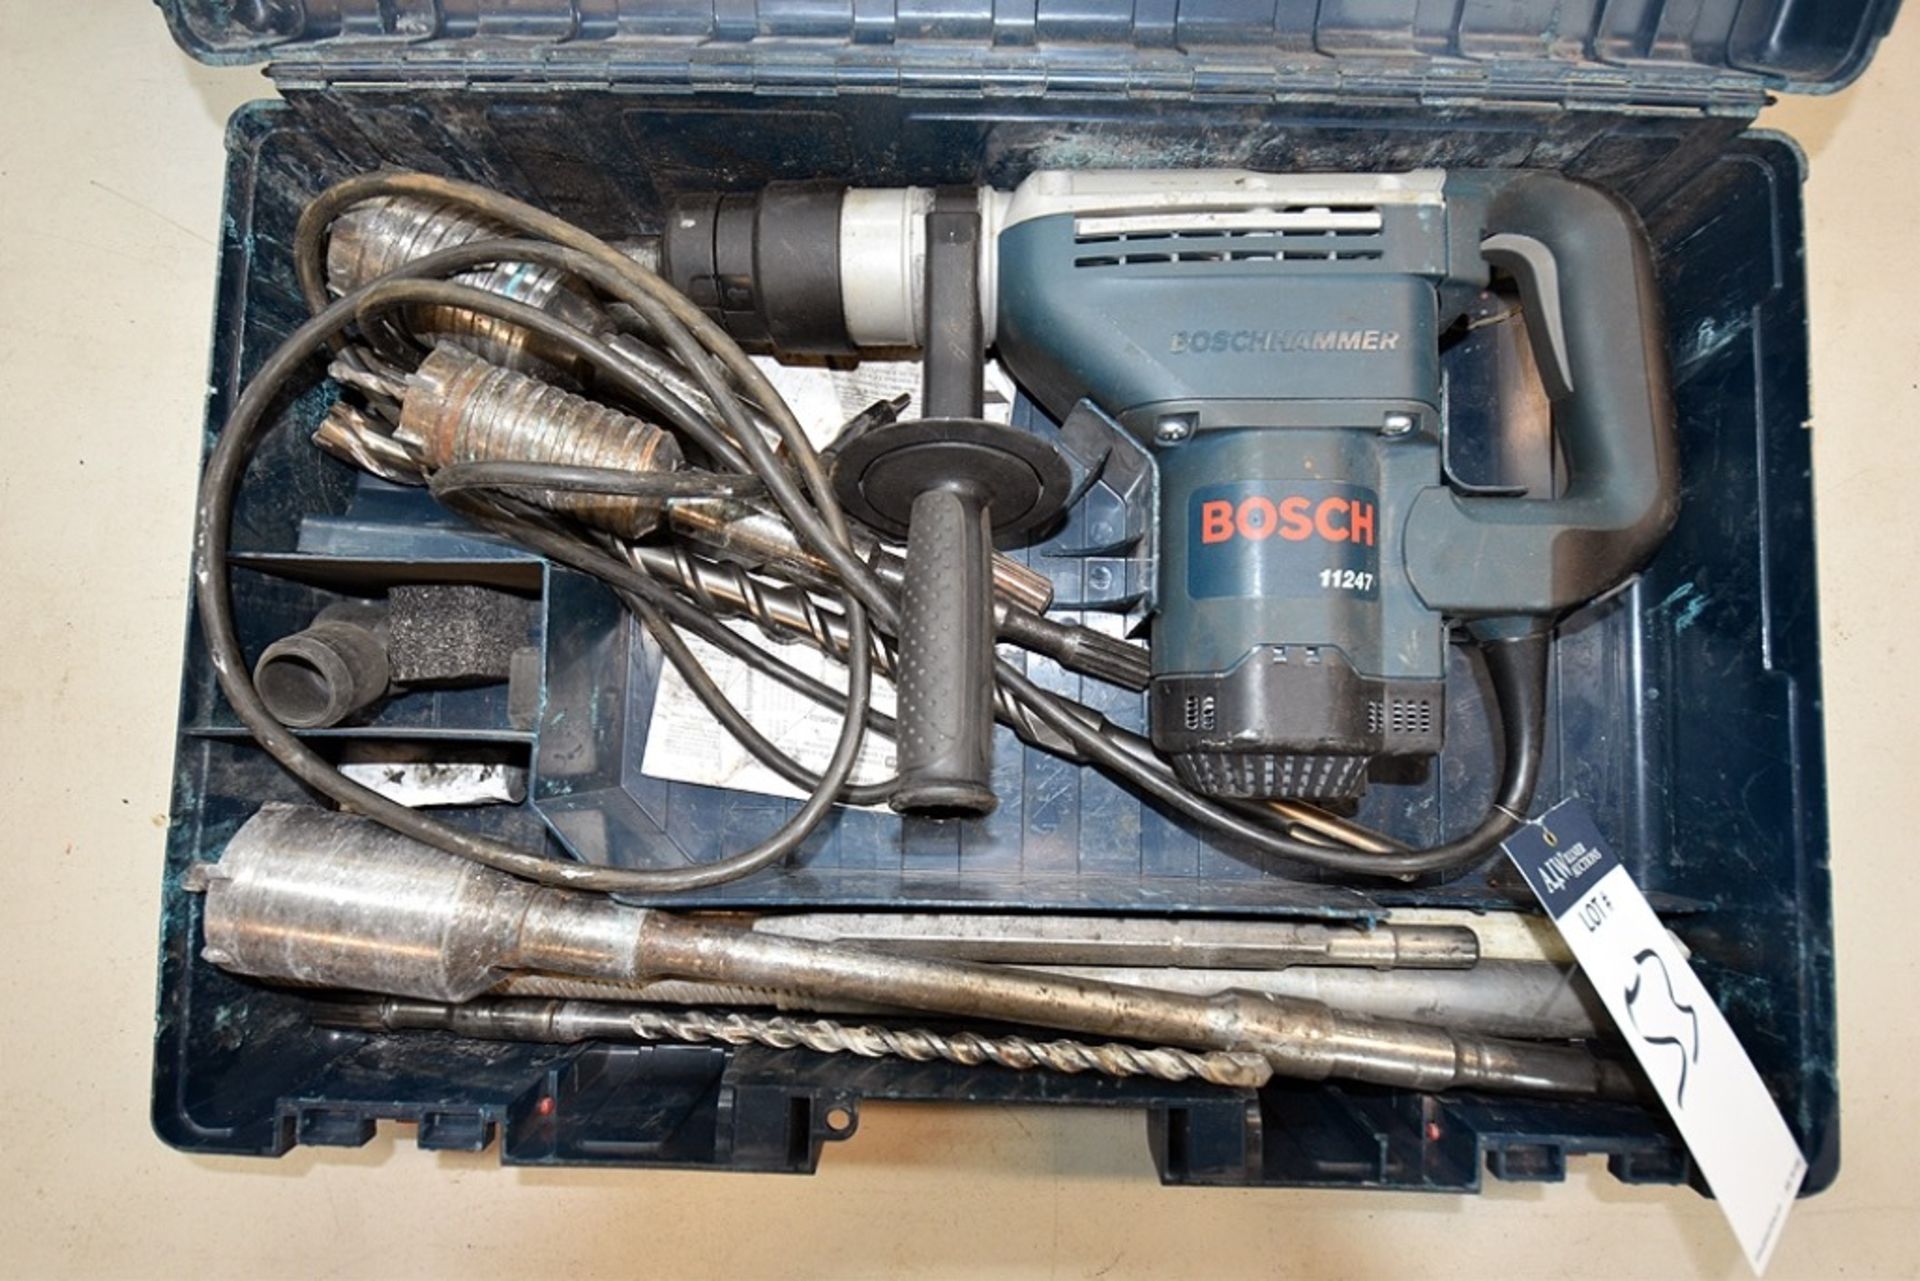 Bosch BoschHammer Model 11247 1-9/16" Corded Combination Hammer w/ Case and Bits